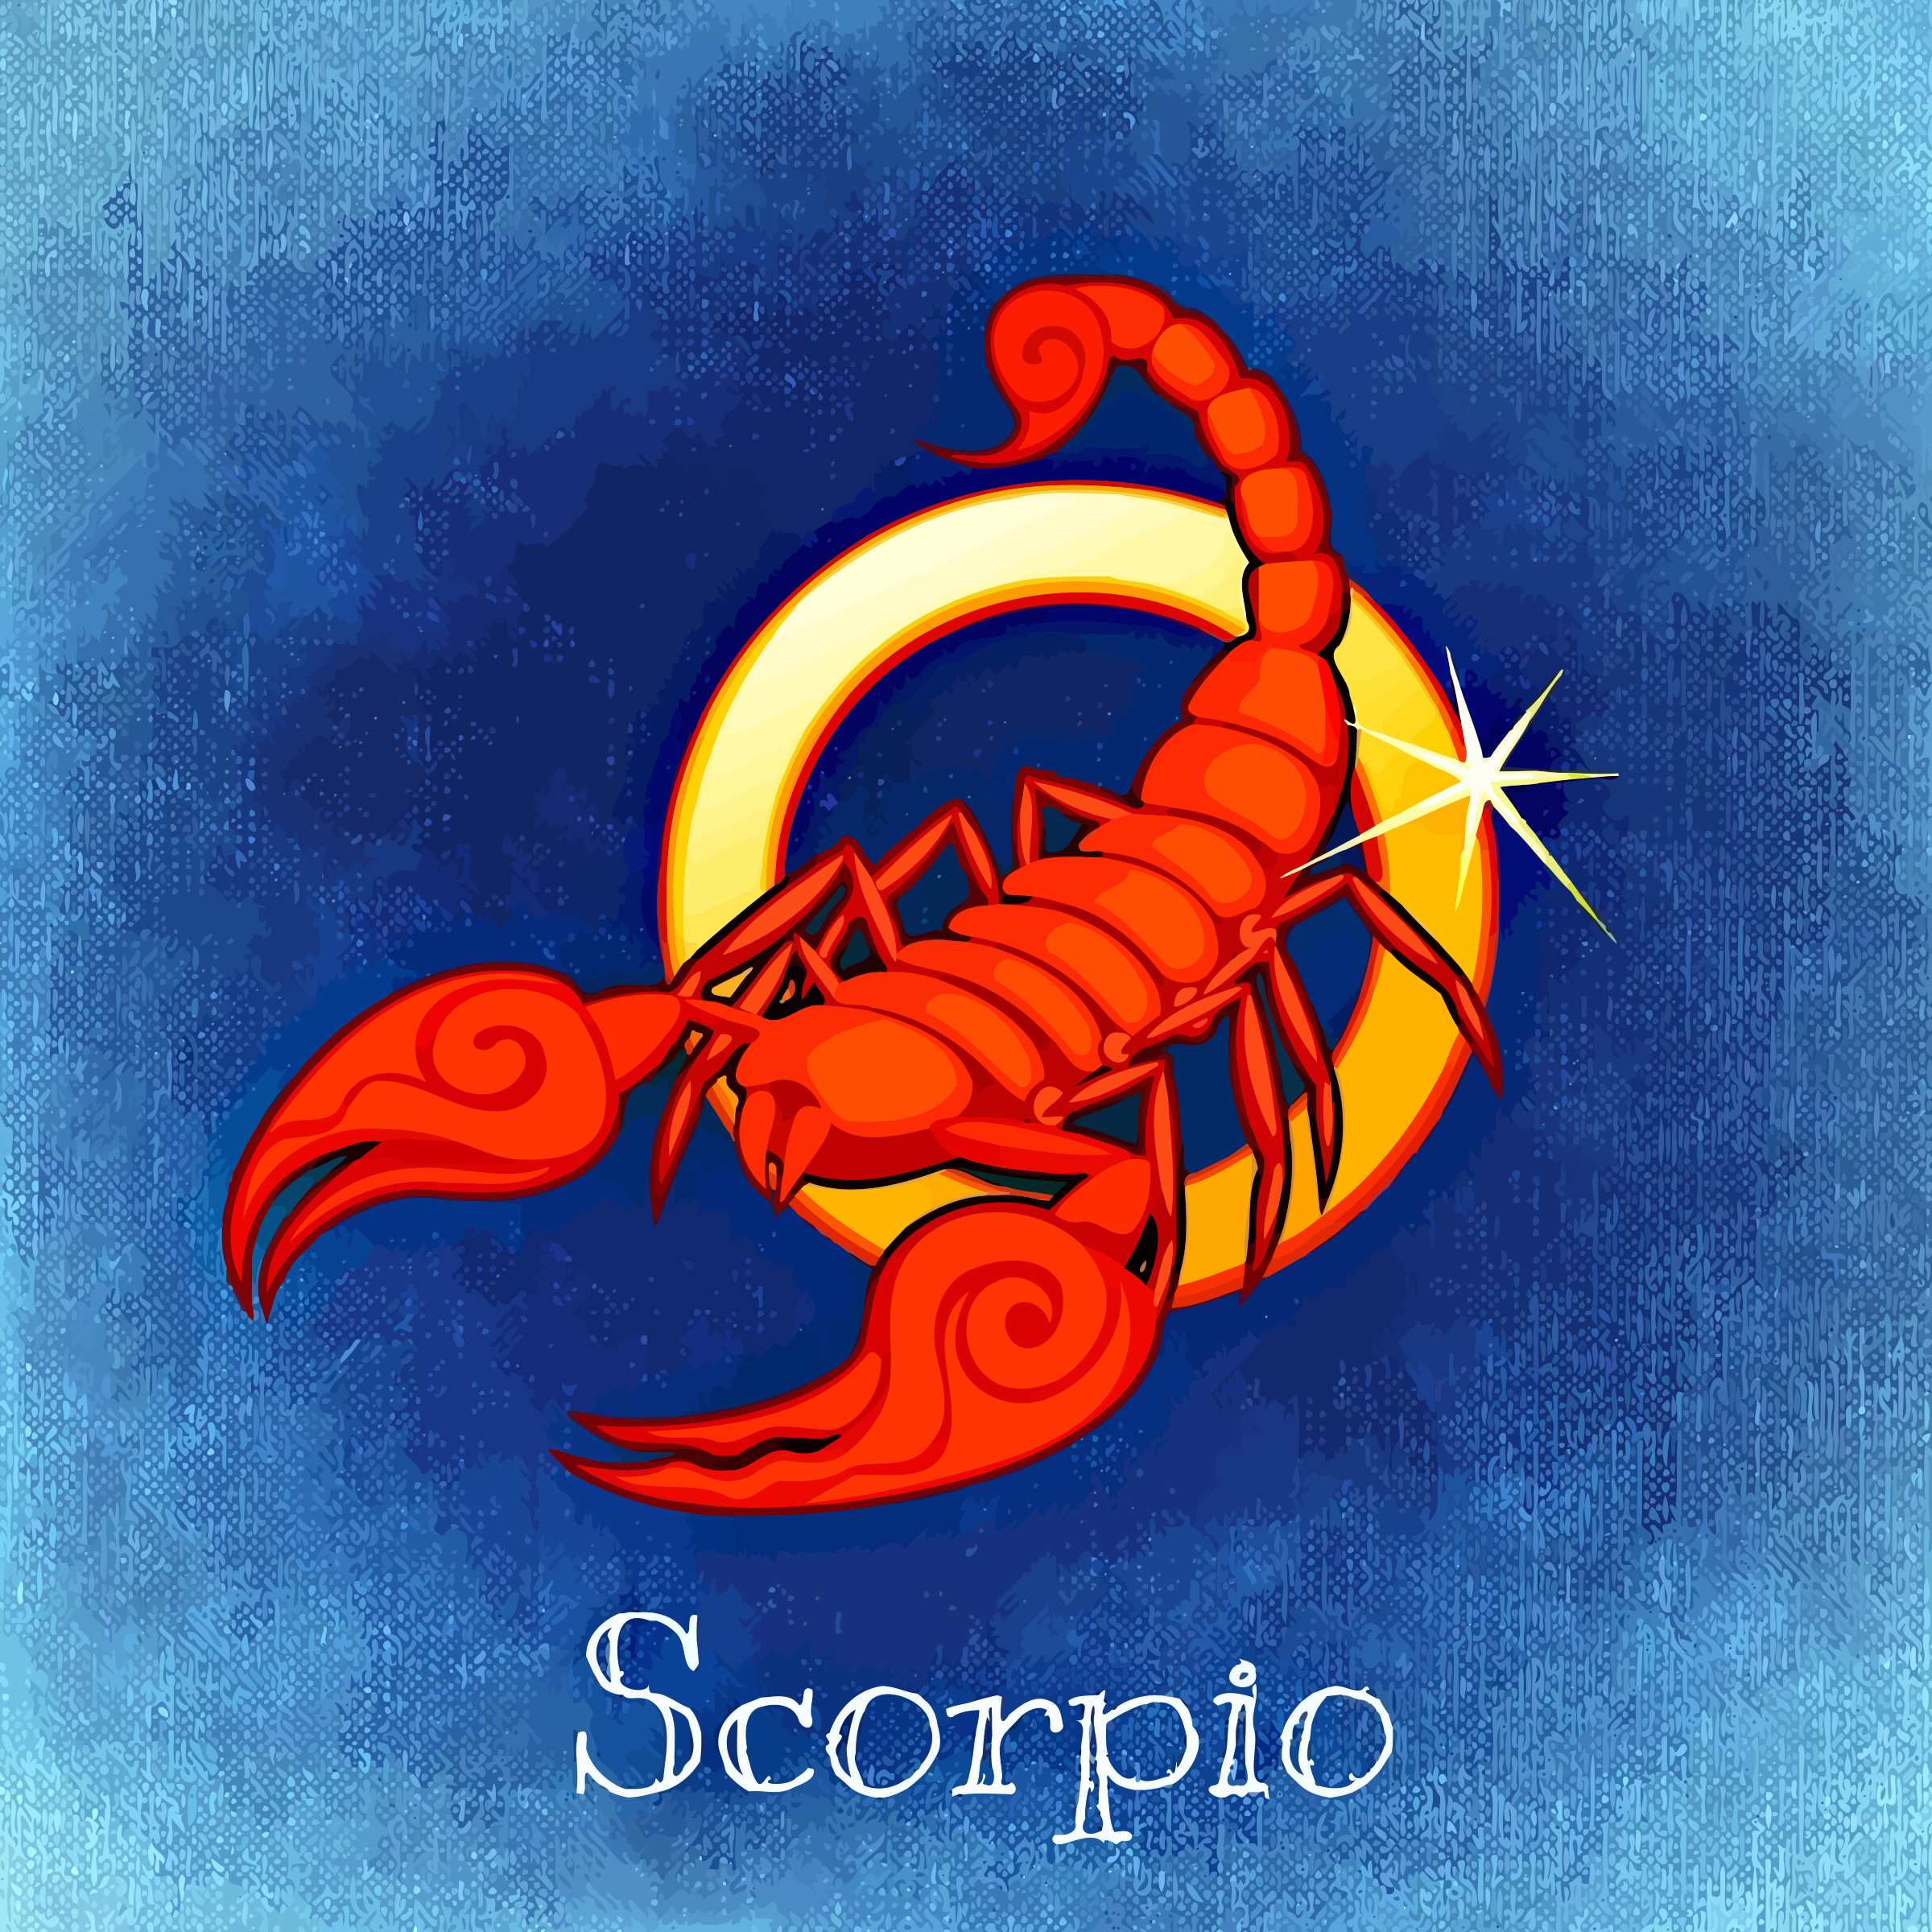 Совместимость мужчины скорпиона тигра. Знак зодиака Скорпион. Скорпион знак зодиака Скорпион. Скорпион знак зодиака символ. Скорпион рисунок.